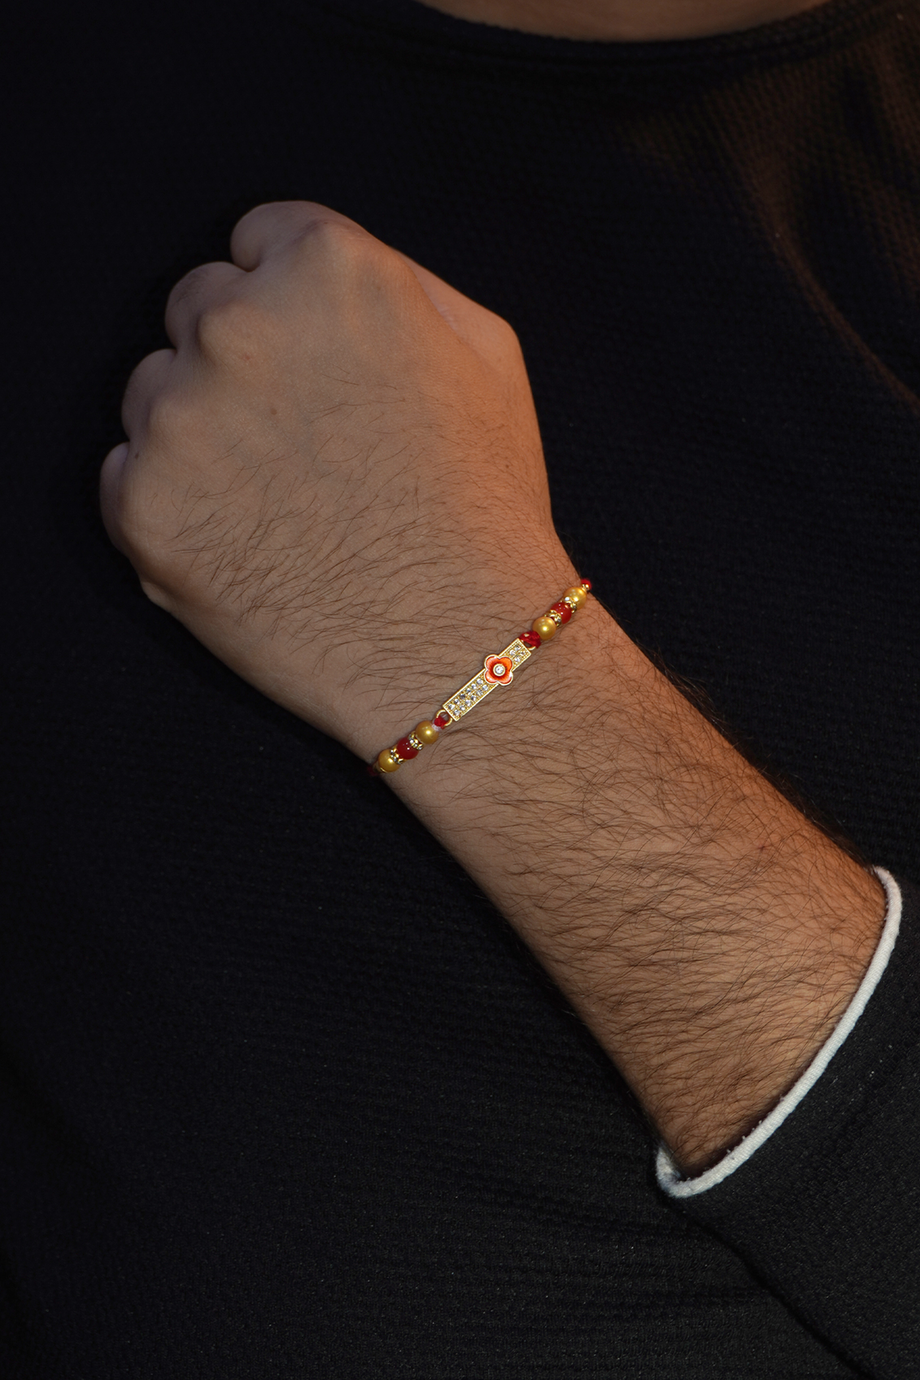 The Symbolism and Significance of the Rakhi Bracelet